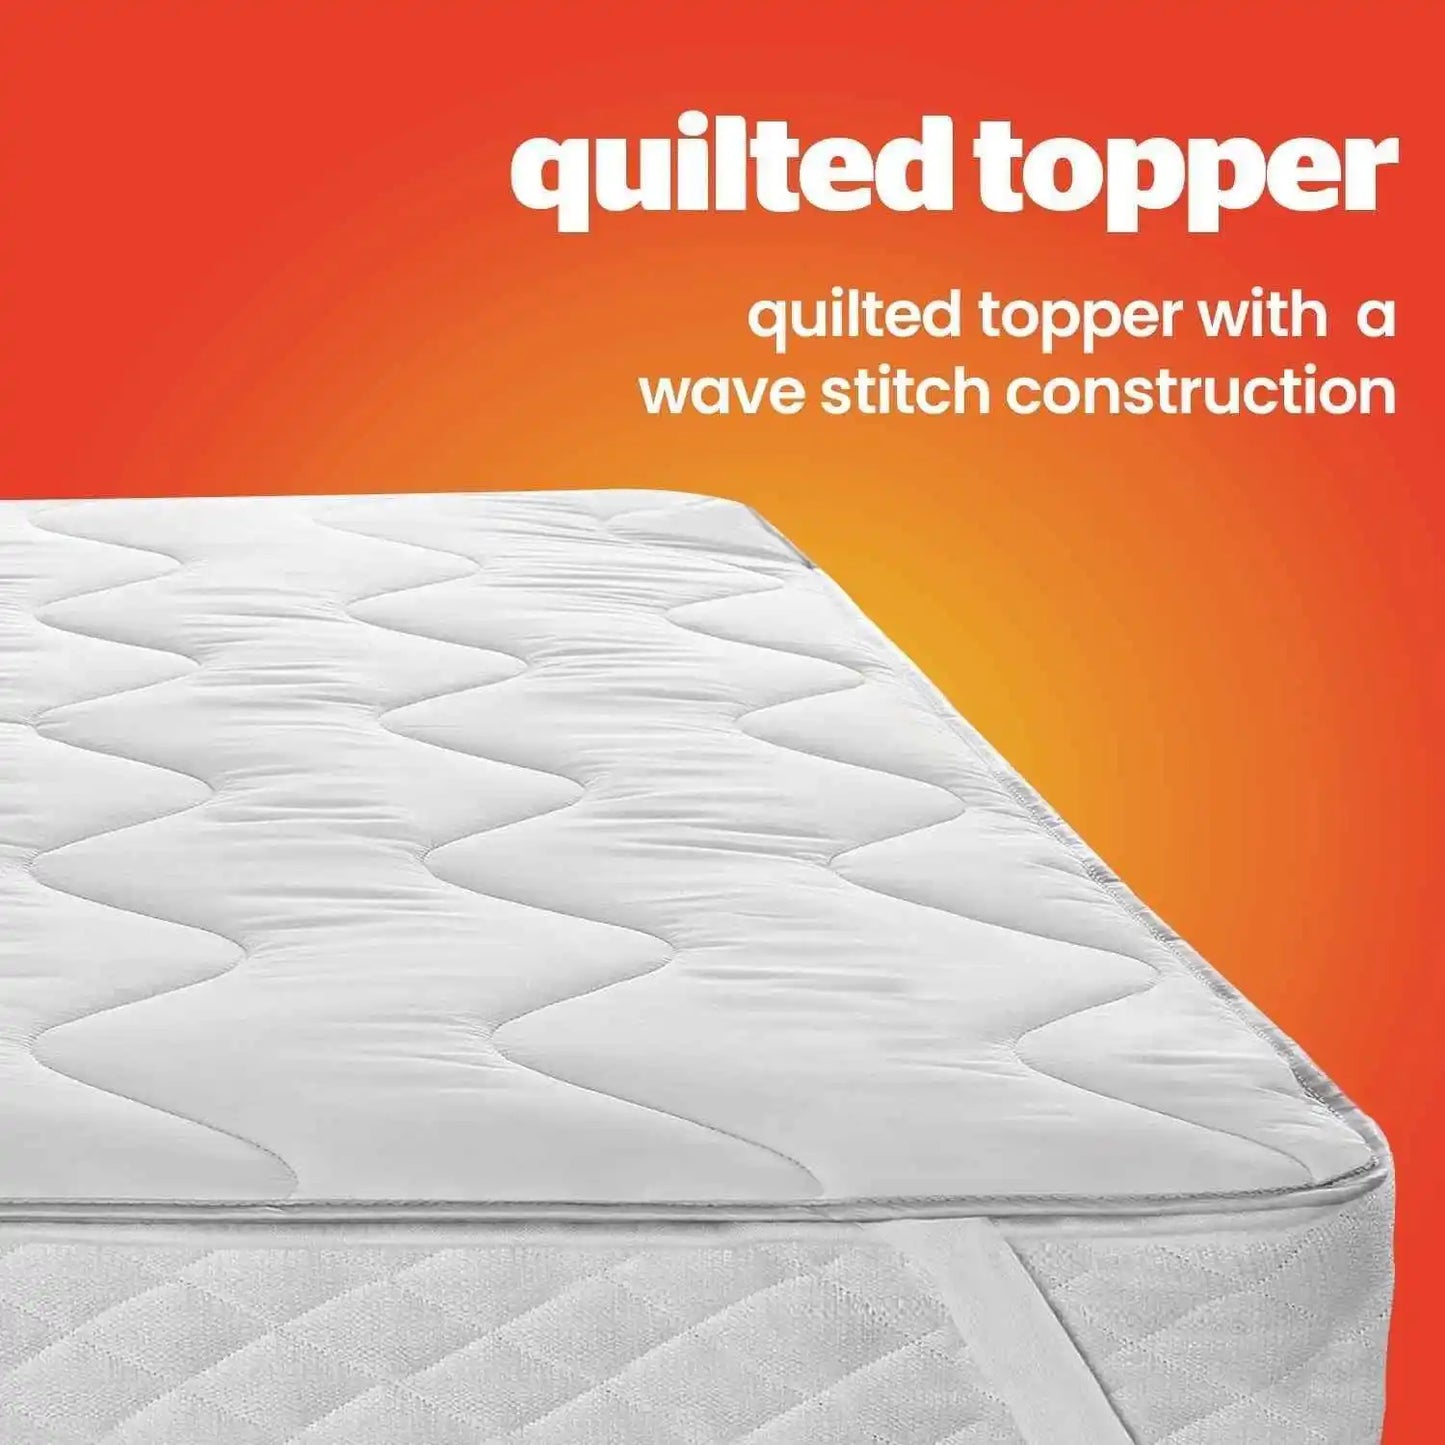 thermal heat retaining mattress topper